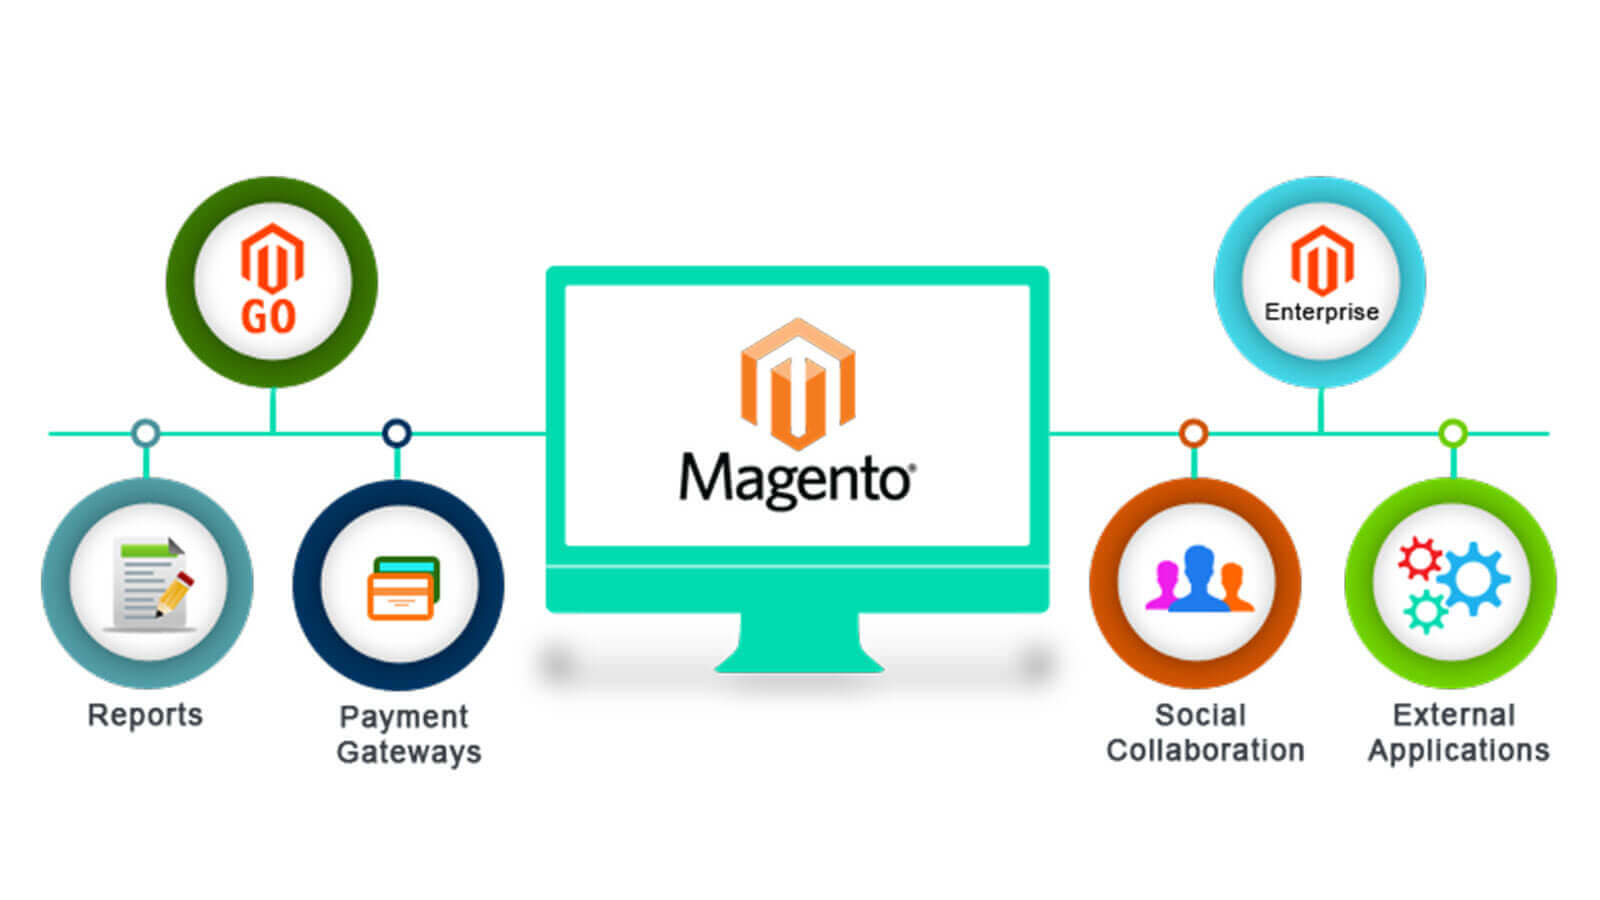 Magento Website Development Company India